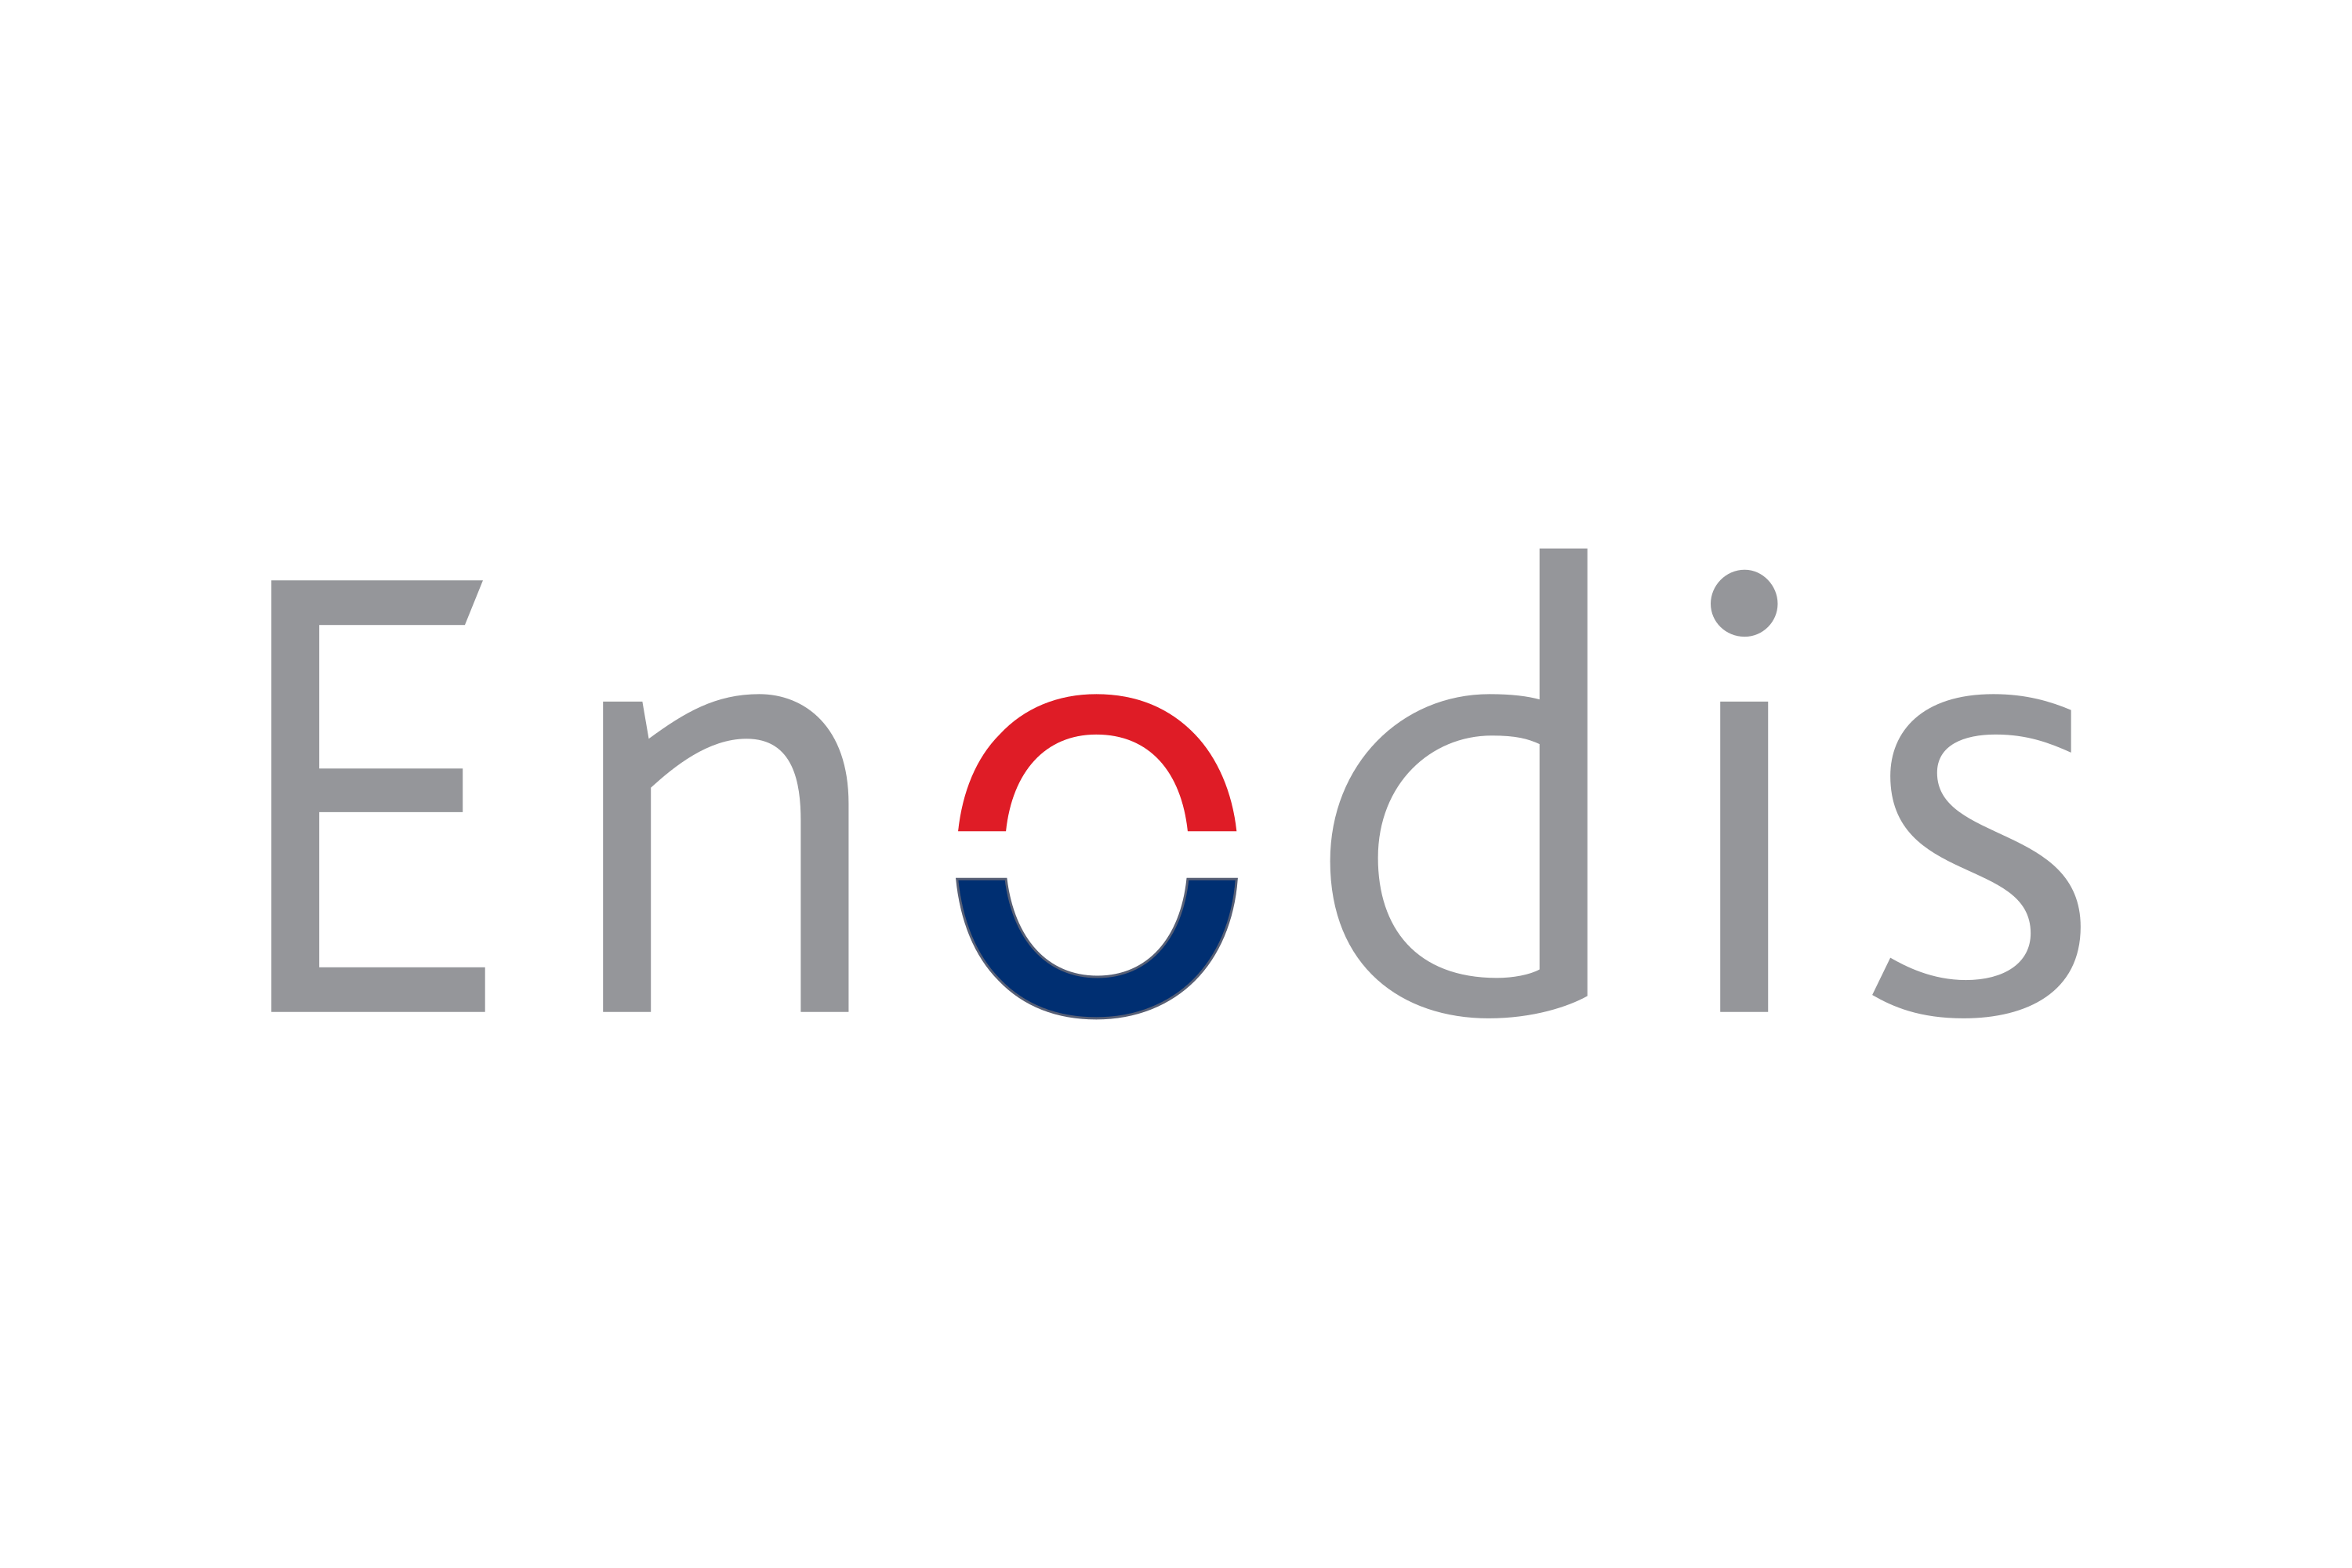 Download Enodis Logo in SVG Vector or PNG File Format - Logo.wine